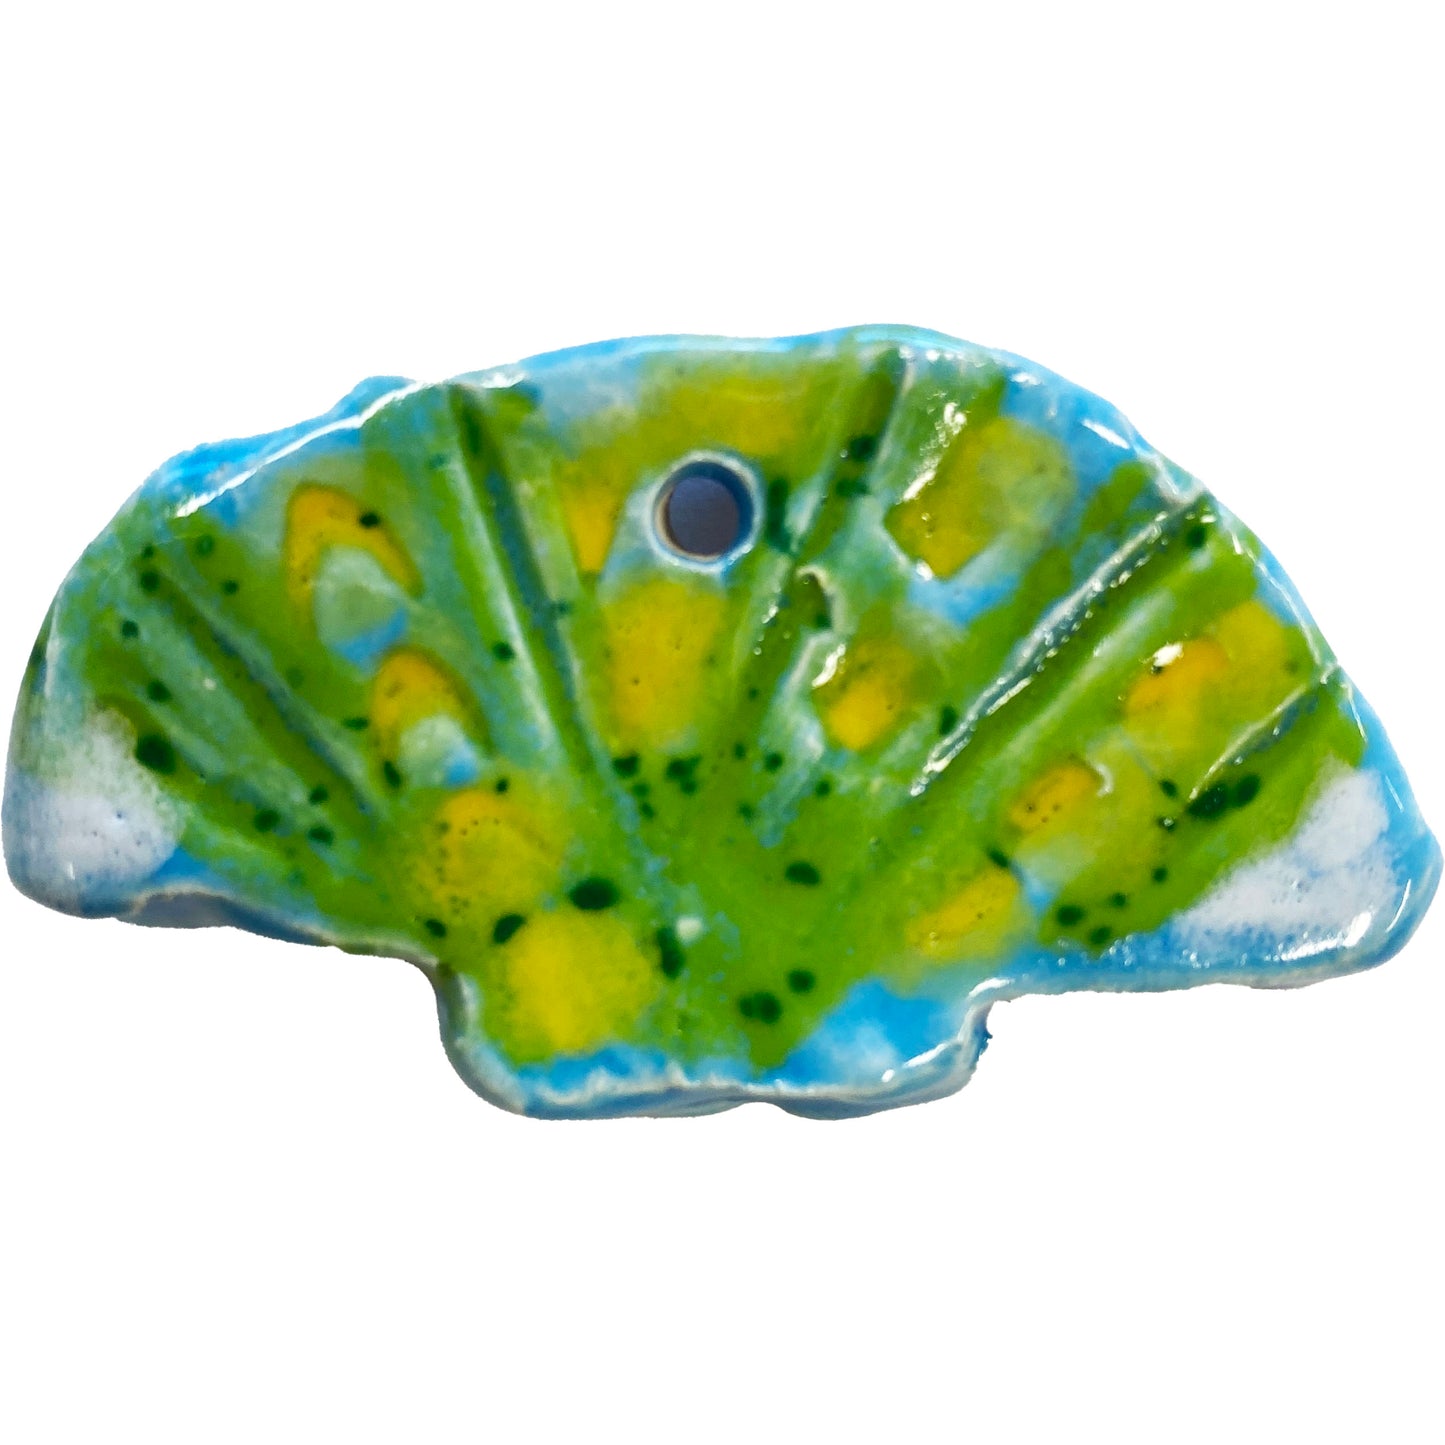 Ceramic Arts Handmade Clay Crafts Fresh Fish Glazed Shell 2.5-inch x 1.5-inch made by Tami Mills